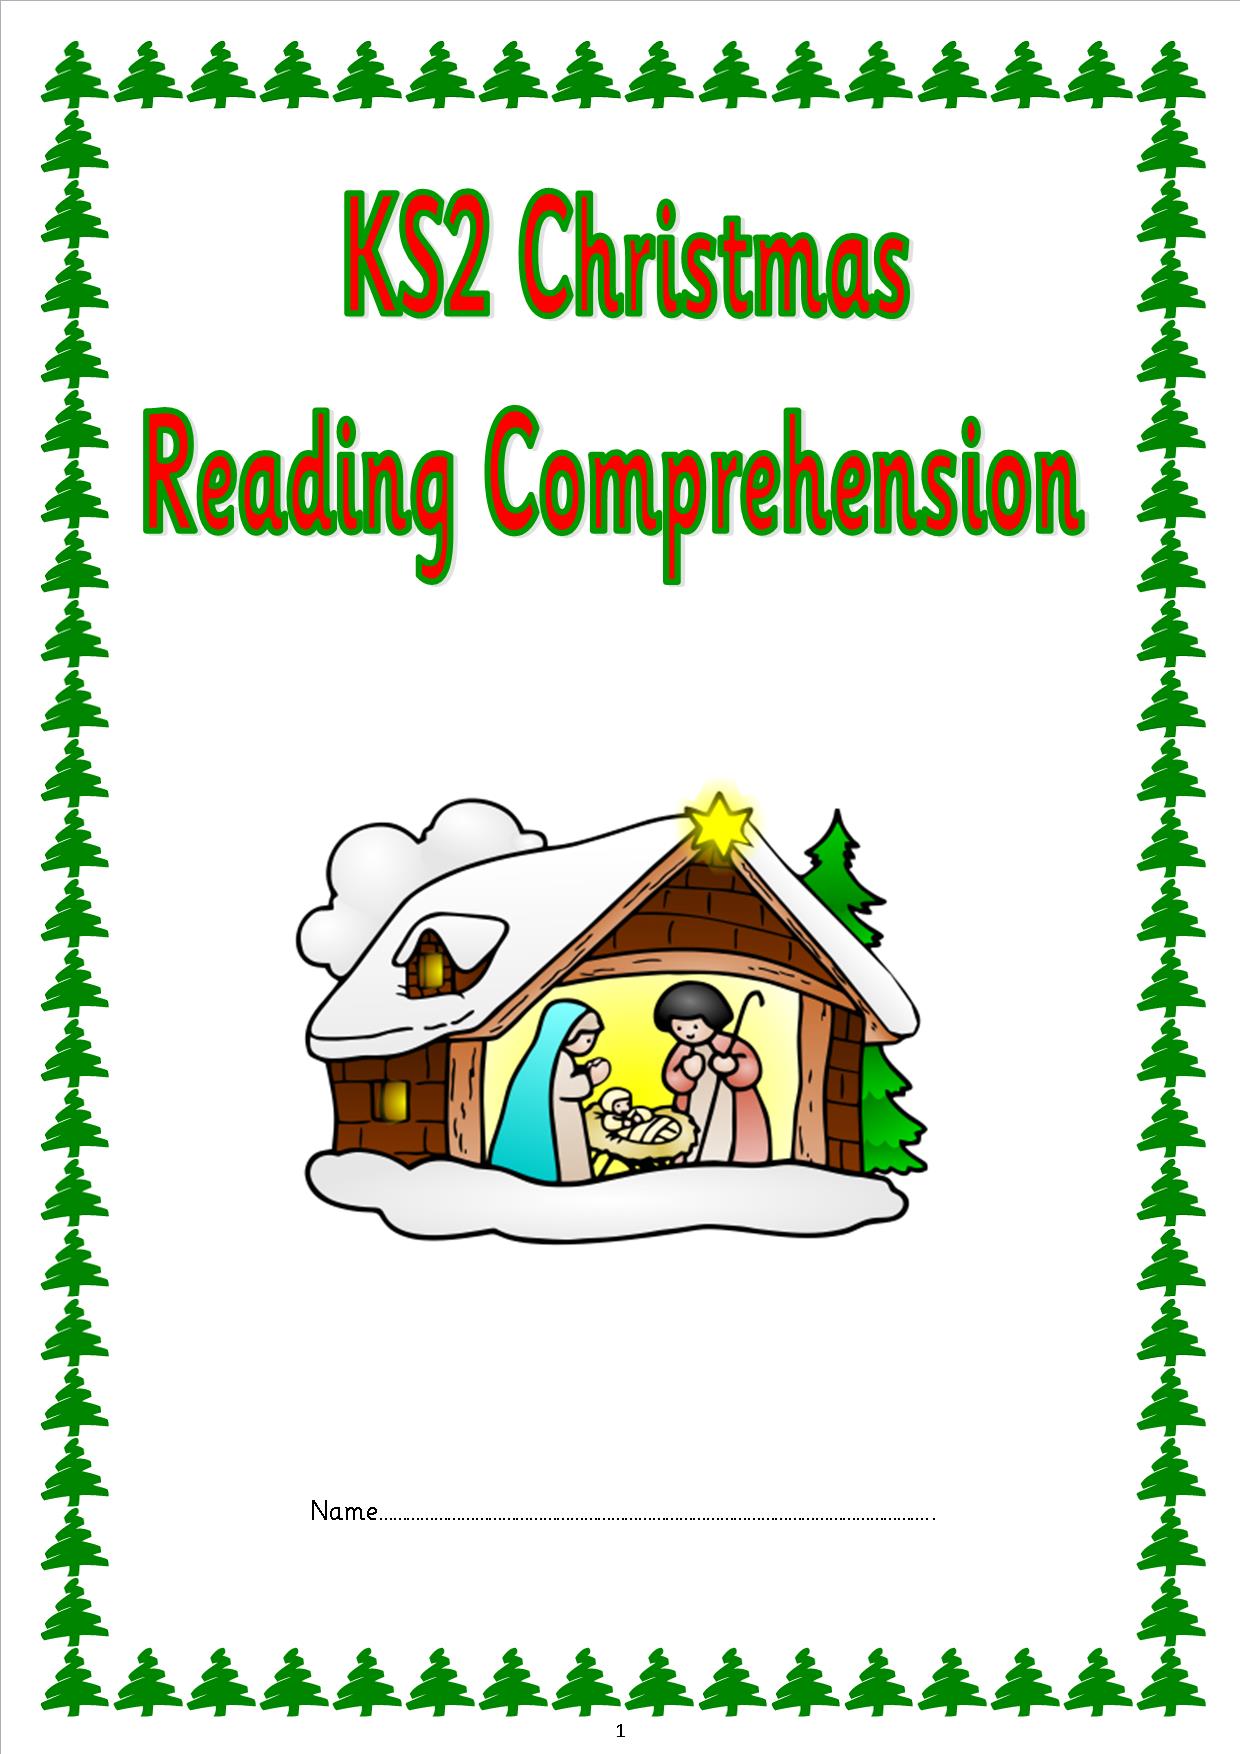 EYFS, KS1, KS2, SEN, Christmas comprehension papers, SATS 